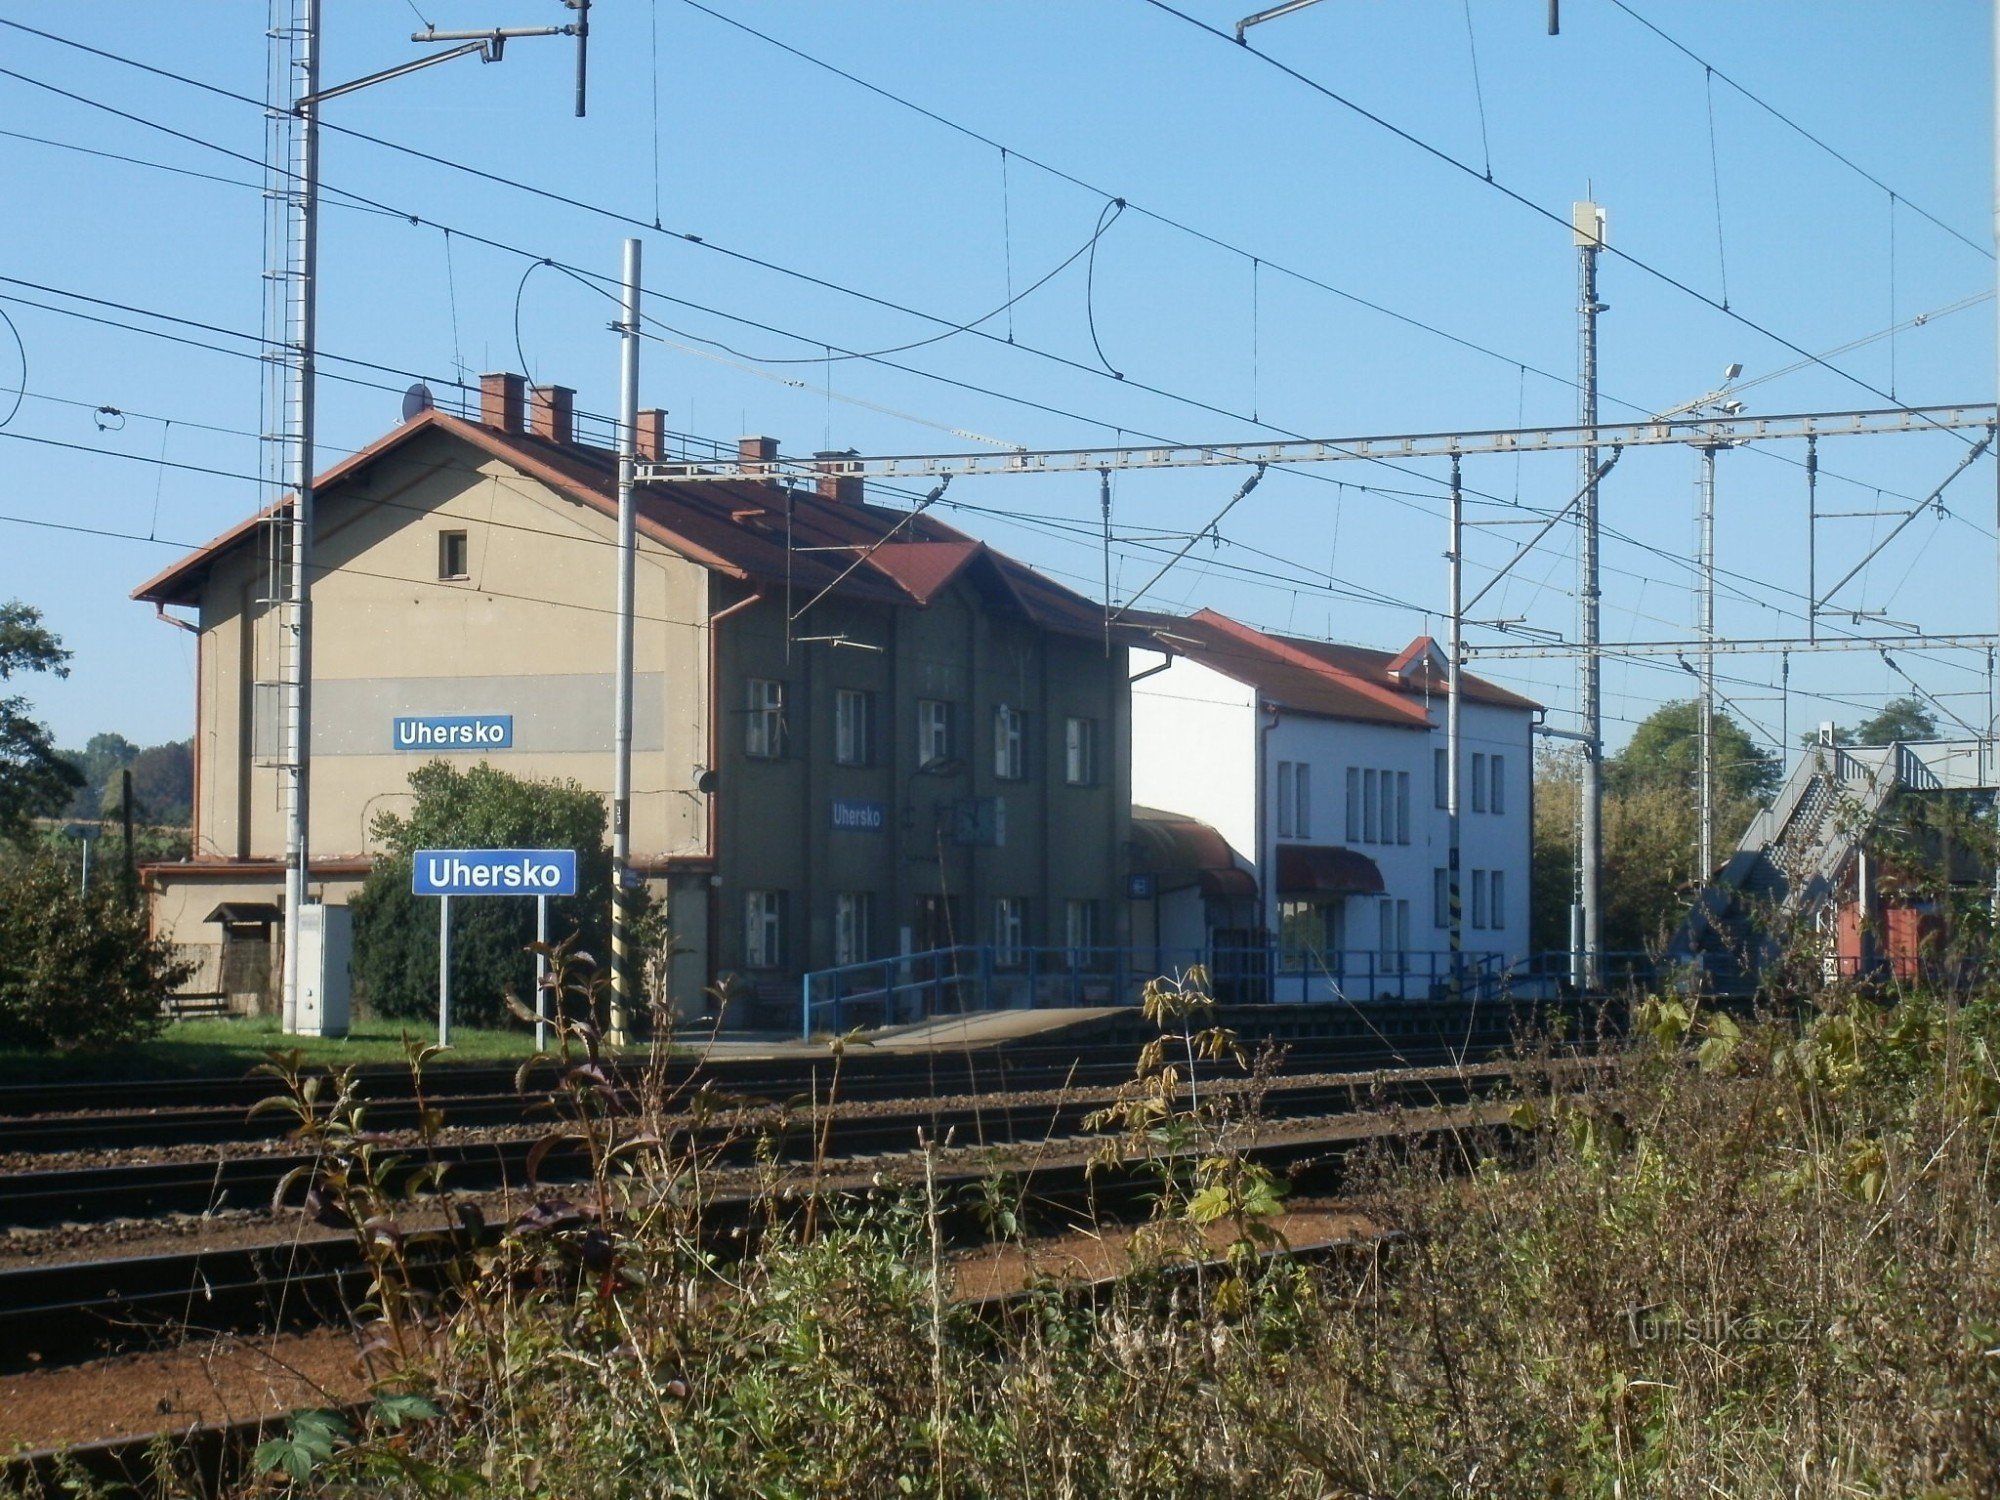 toeristisch kruispunt Hongarije - spoorweg, treinstation